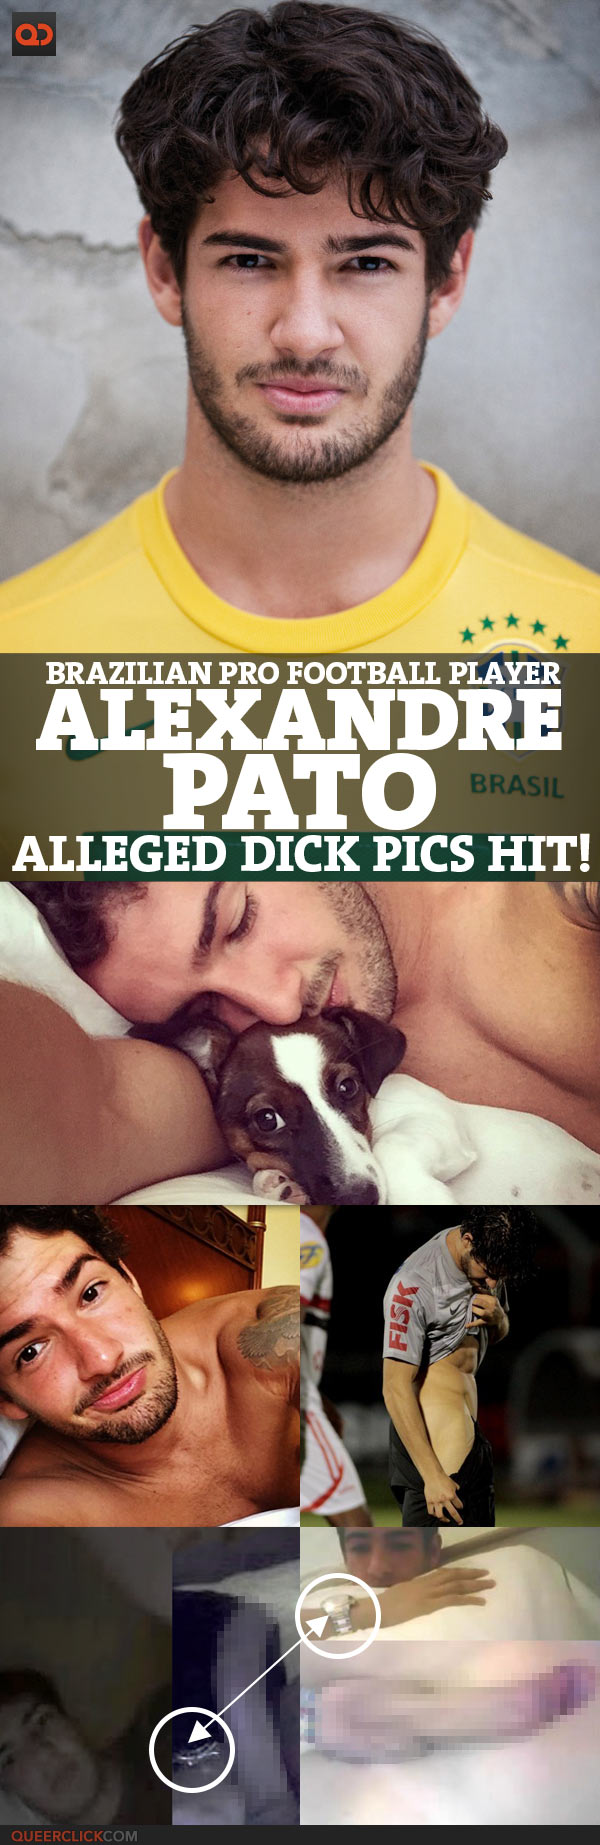 Alexandre Pato, Brazilian Pro Football Player, Alleged Dick Pics Hit! image image